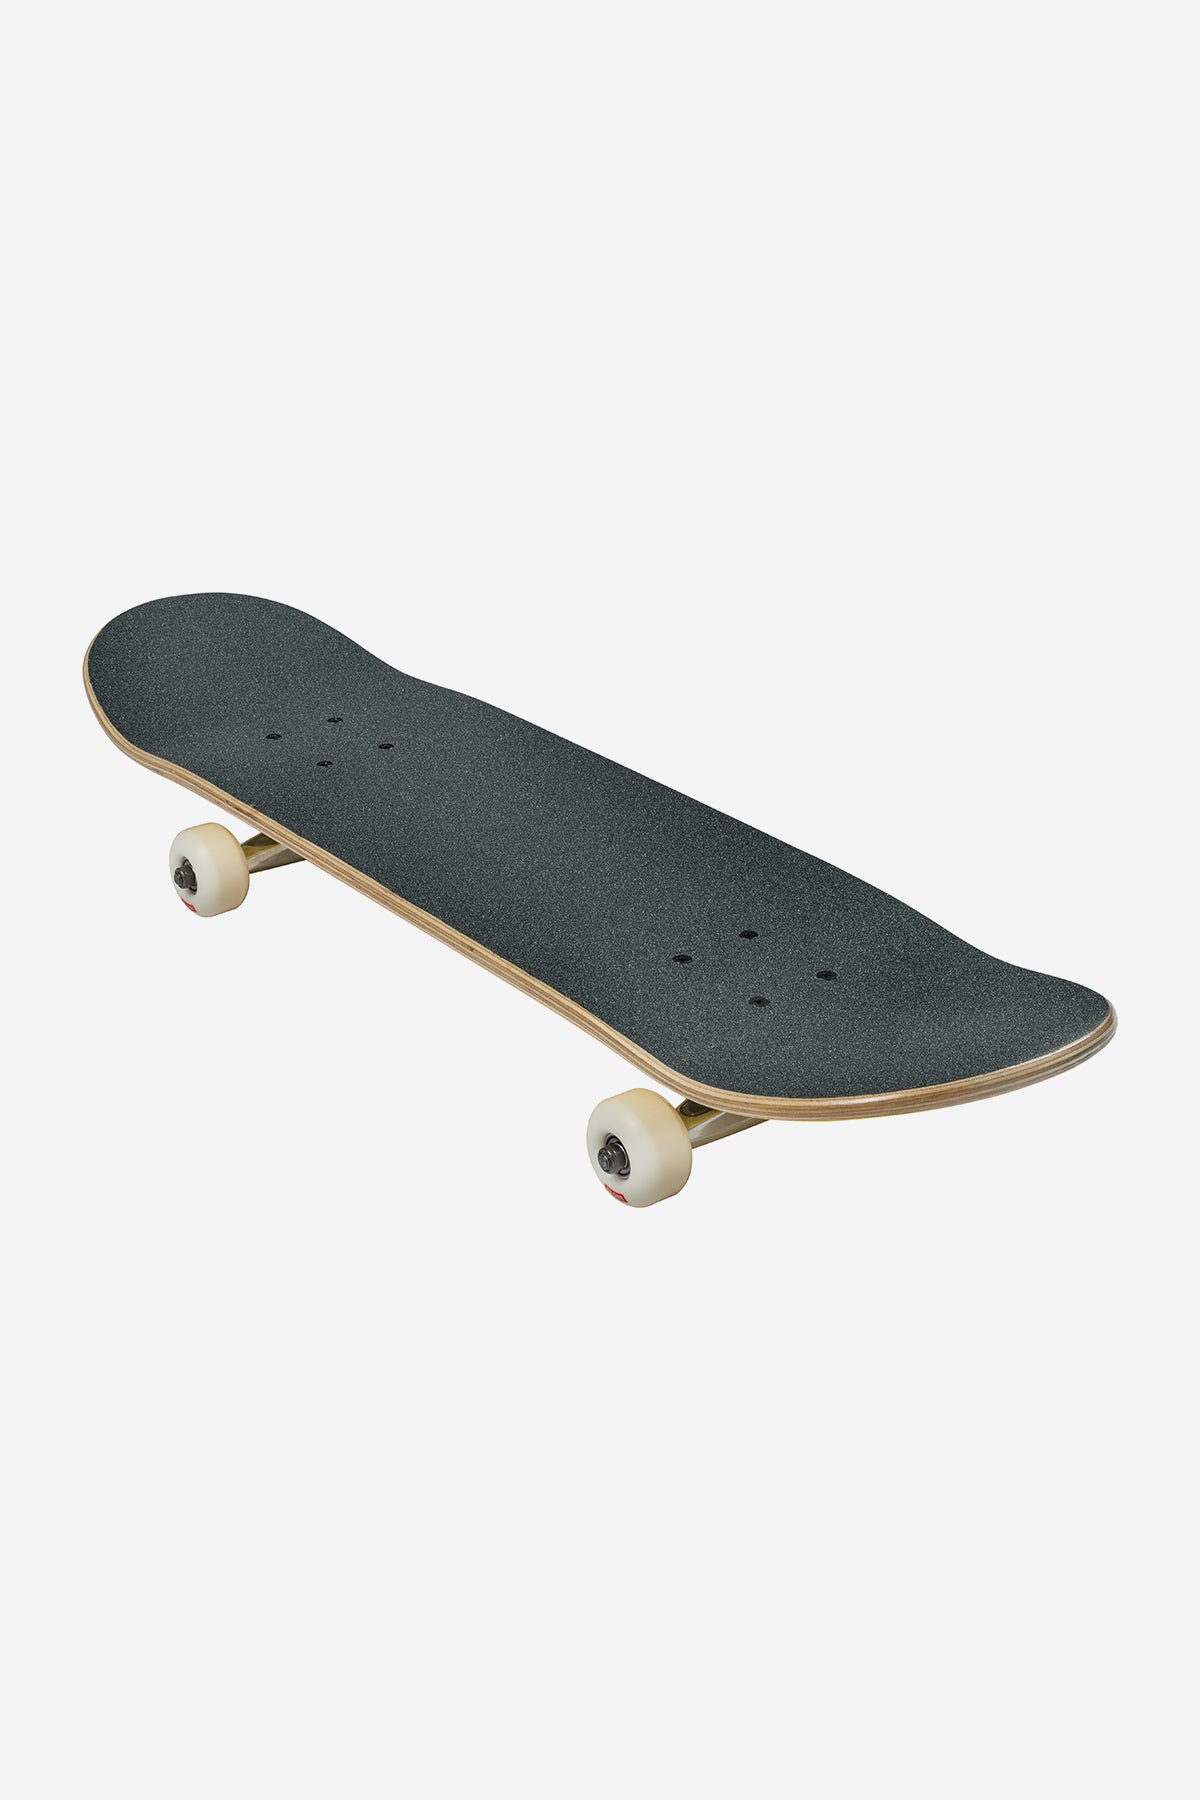 Globe - Goodstock - Red - 7.75" Compleet Skateboard